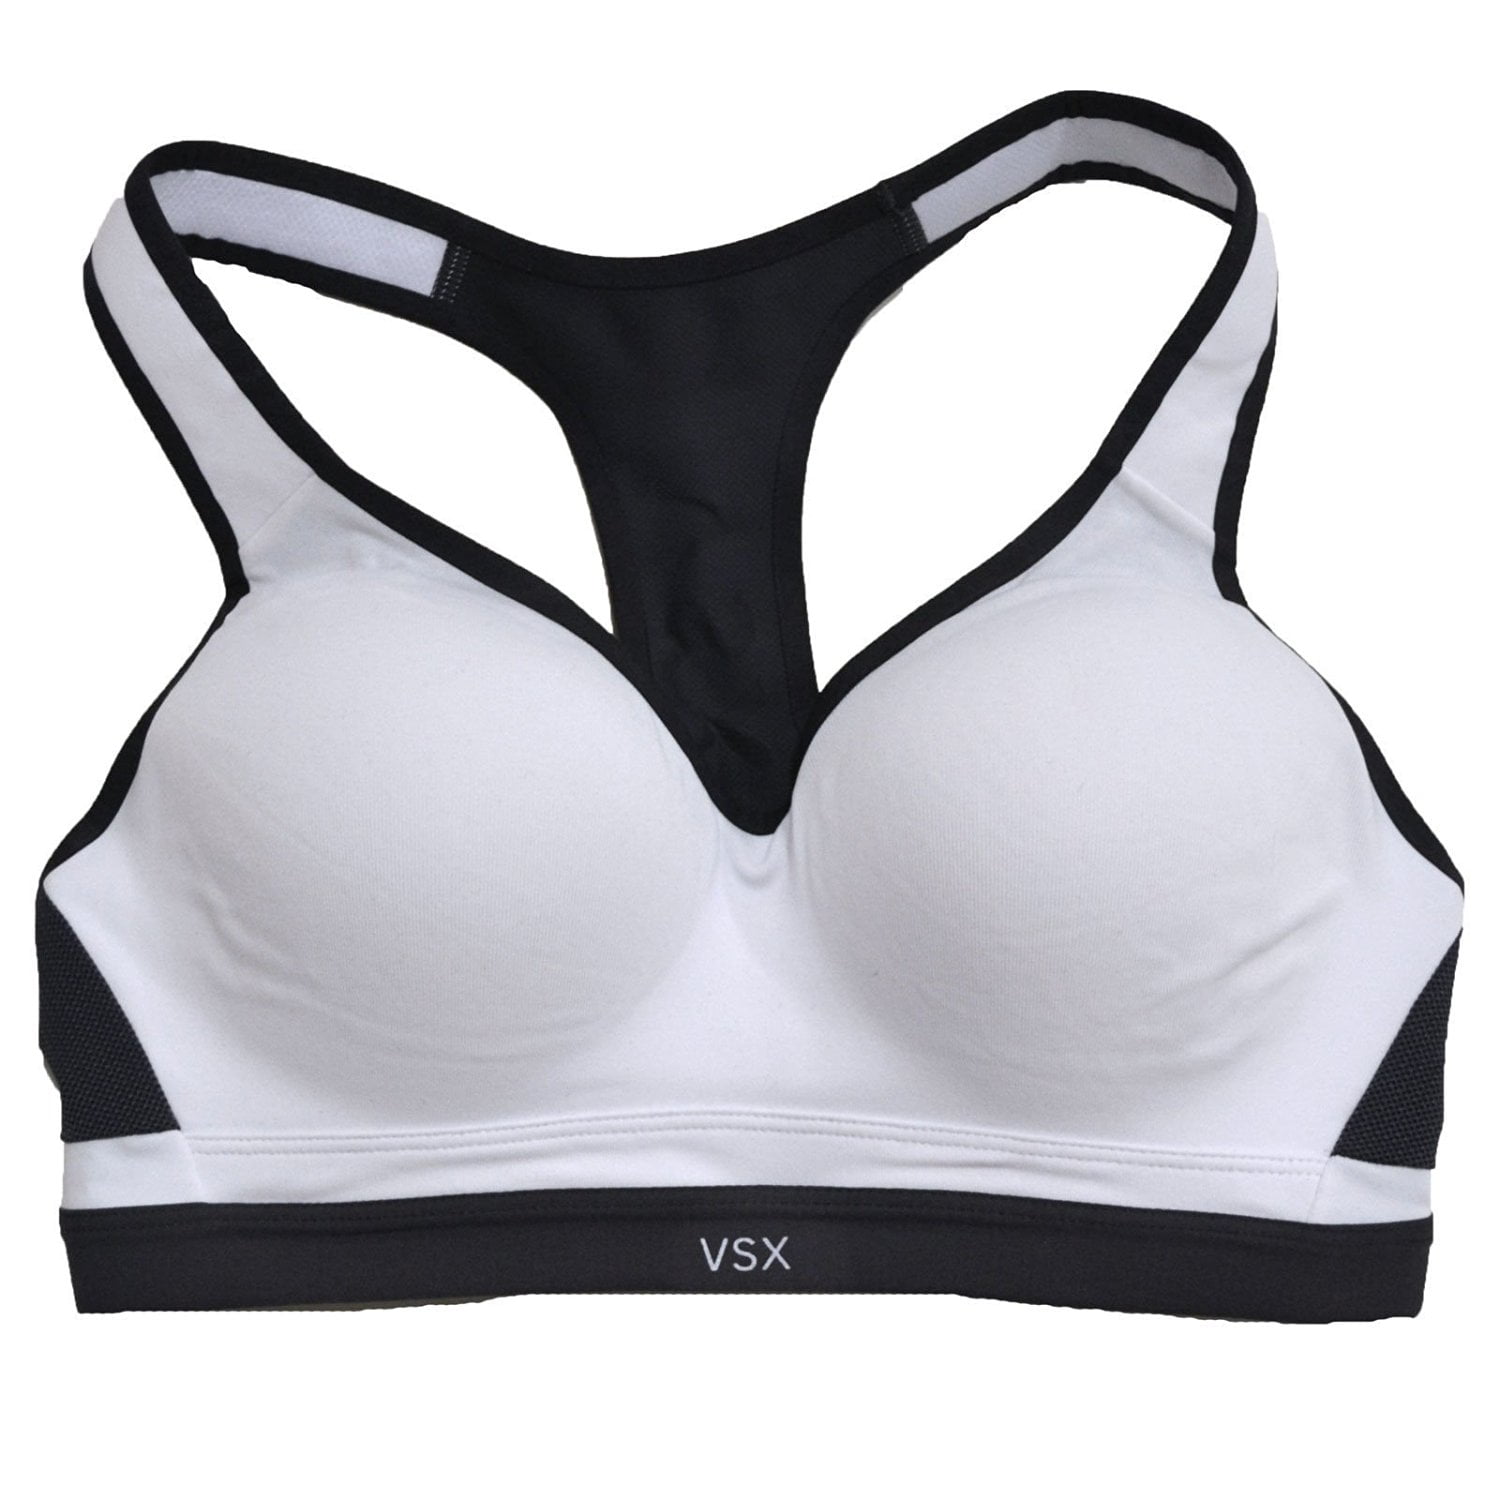 Victoria's Secret VSX Sports Bra Black Gray High Support Size